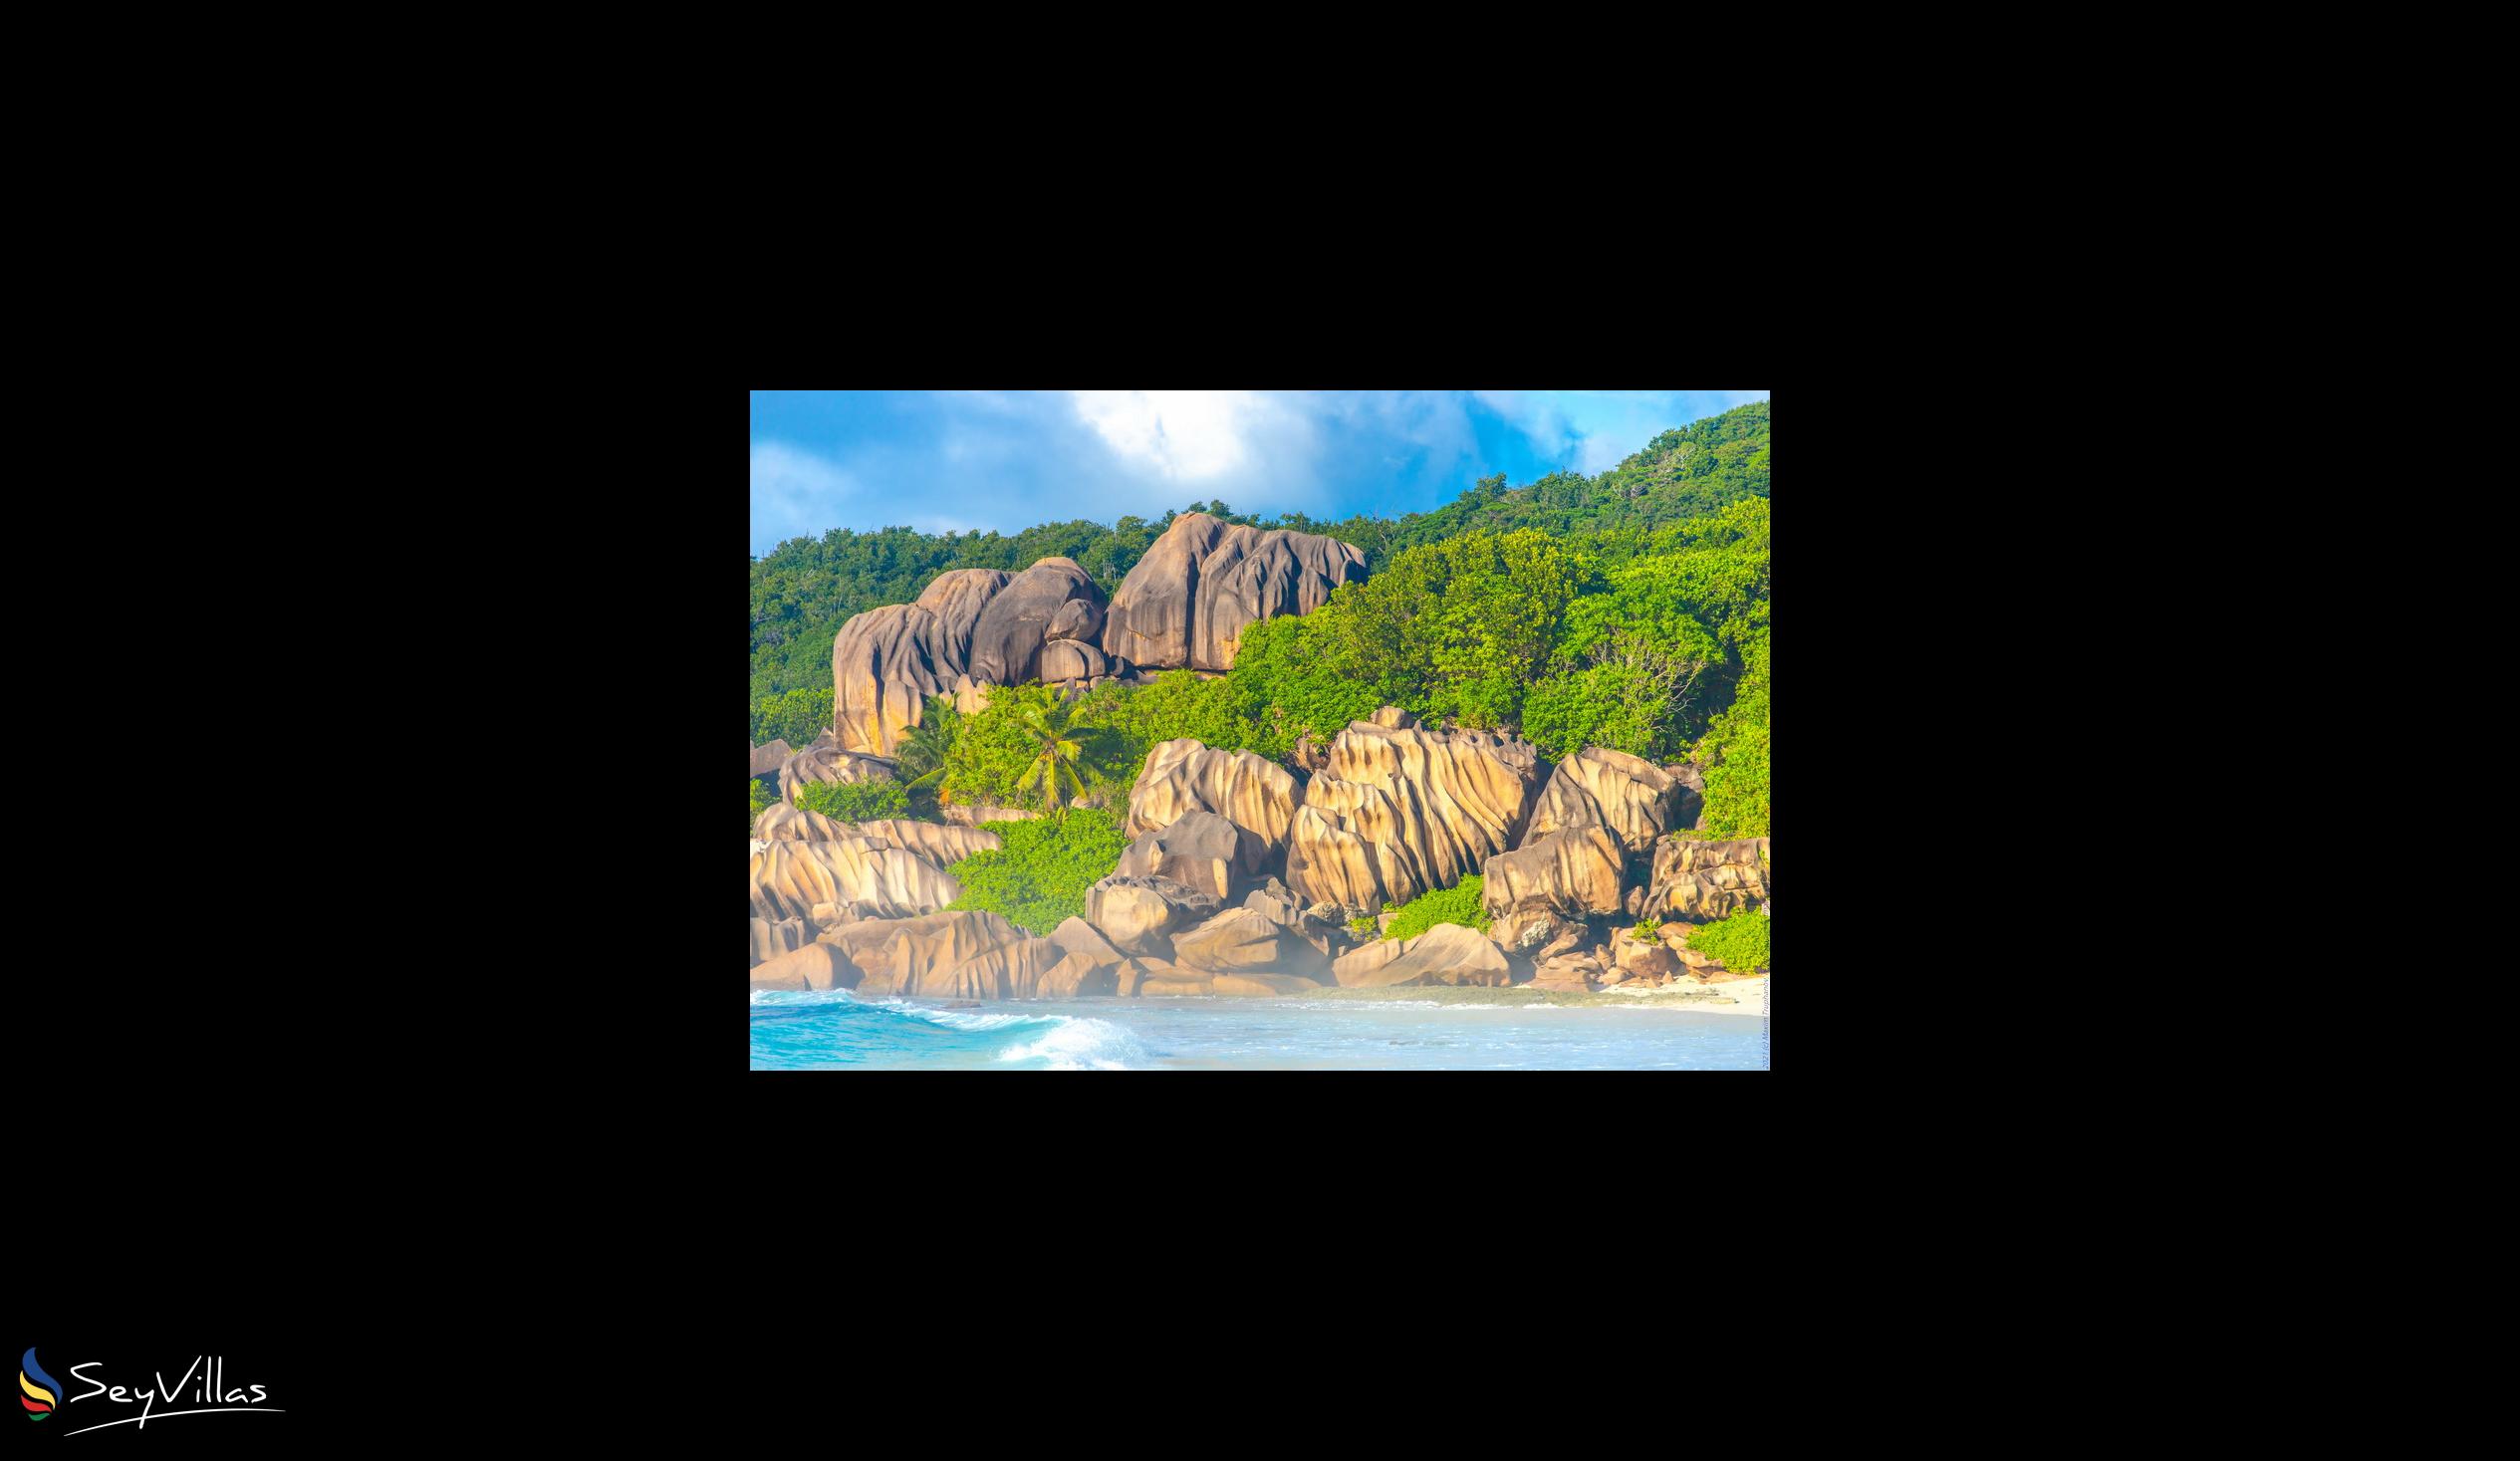 Photo 45: Ambiance Villa - Location - La Digue (Seychelles)